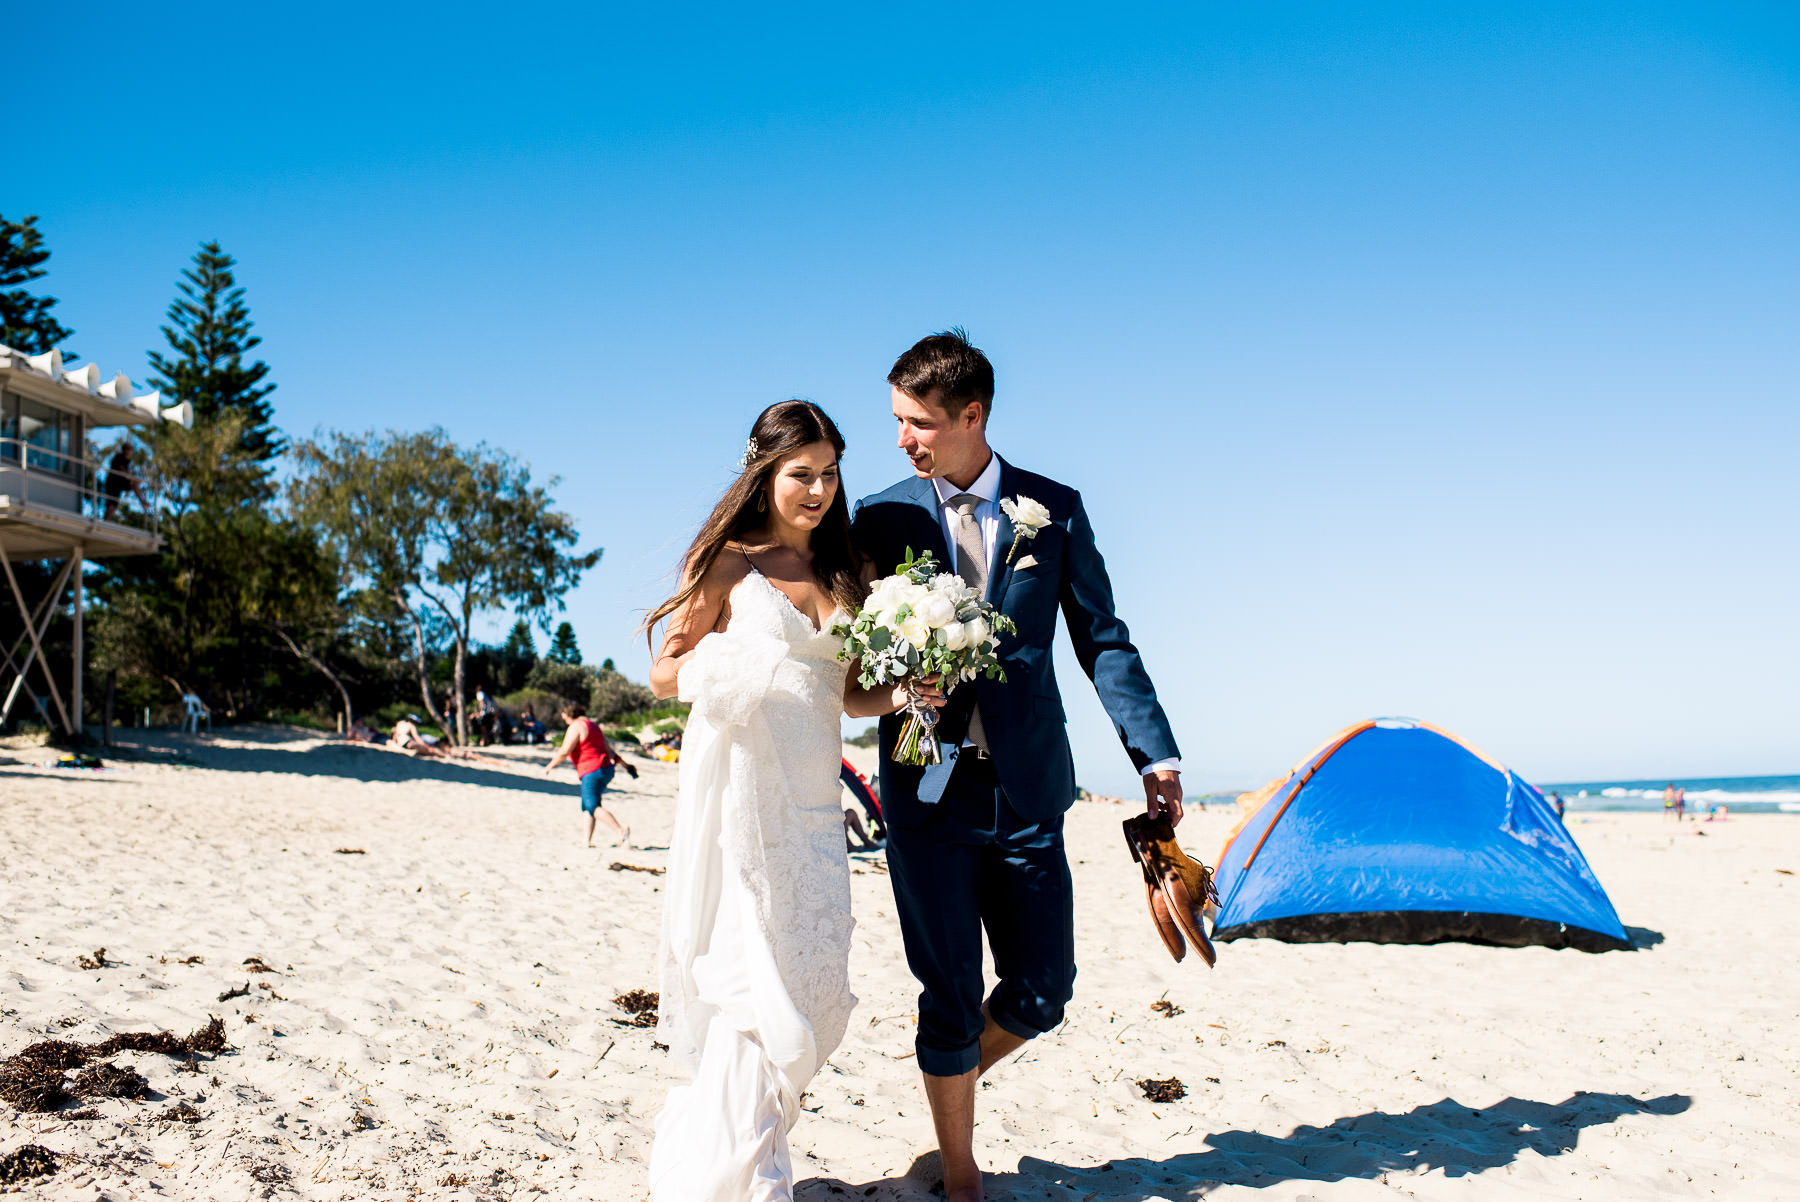 wedding inspo, australia wedding, beach wedding inspo, beach wedding, summer wedding